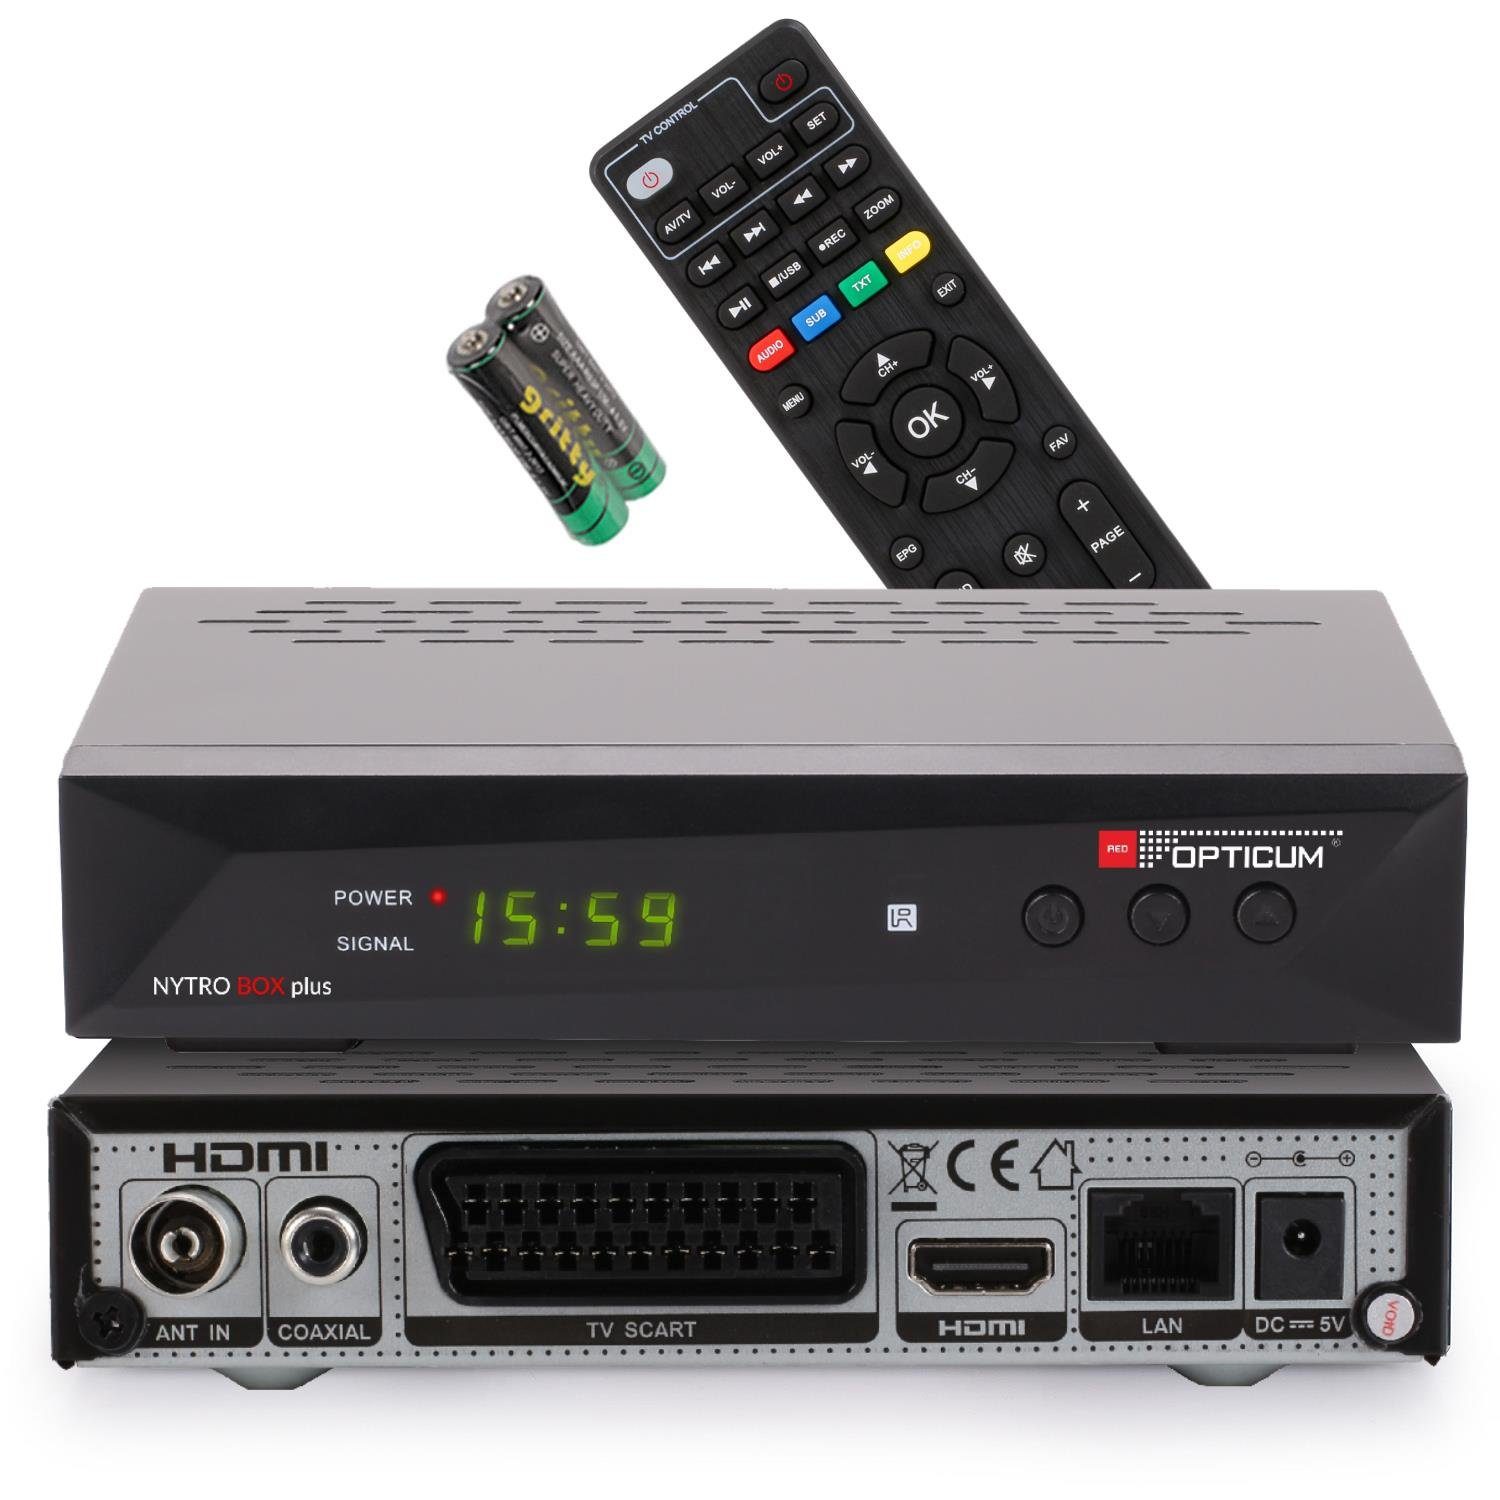 RED OPTICUM Nytro Box (DVB-C Plus Receiver USB, DVB-T2 DVB-T2 HD mit Aufnahmefunktion PVR, HDMI, SCART) Hybrid Receiver & Receiver